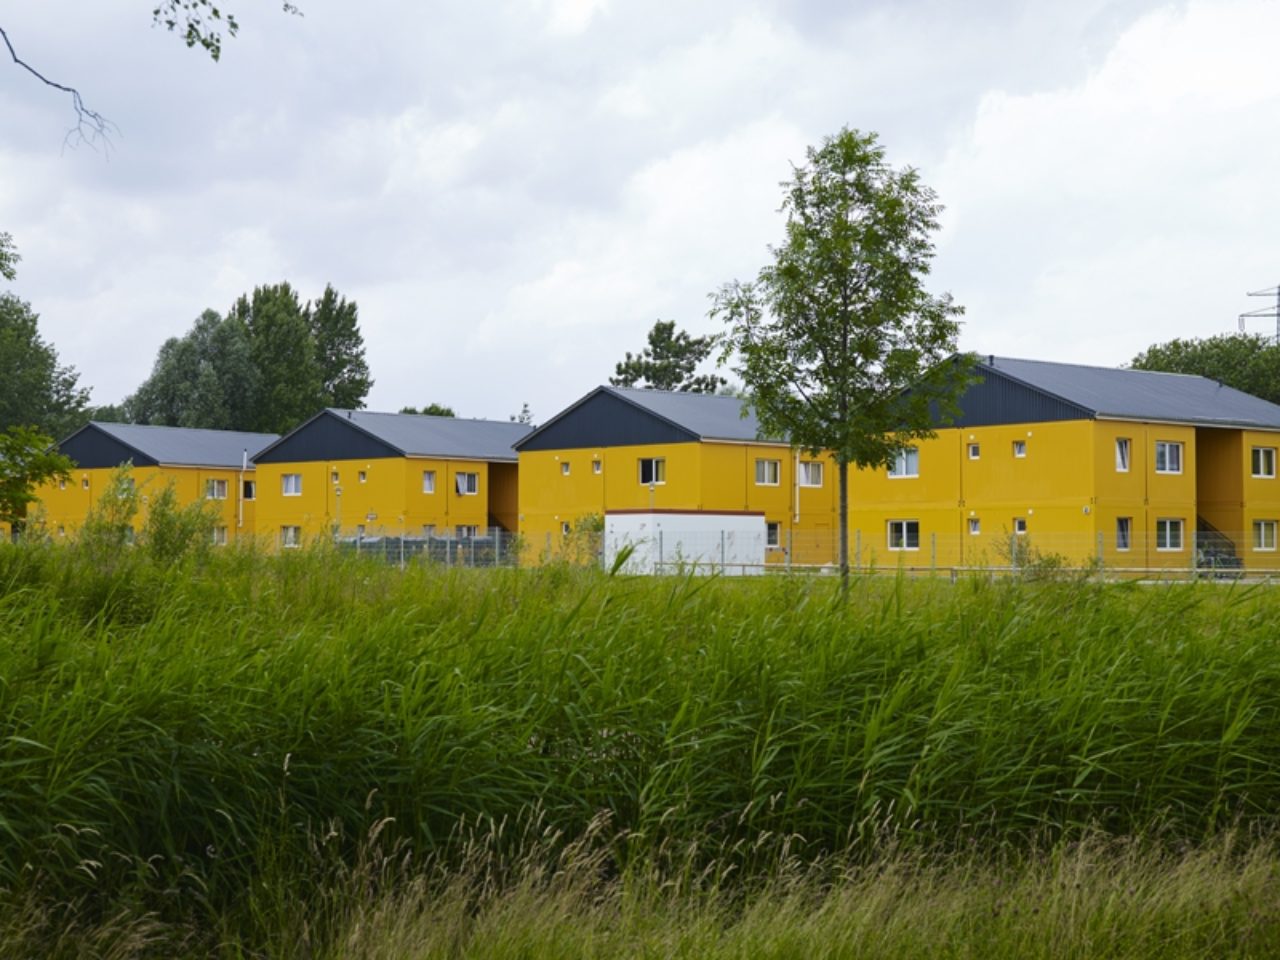 Socialni-bytove-domy-lewenwerder-hamburk